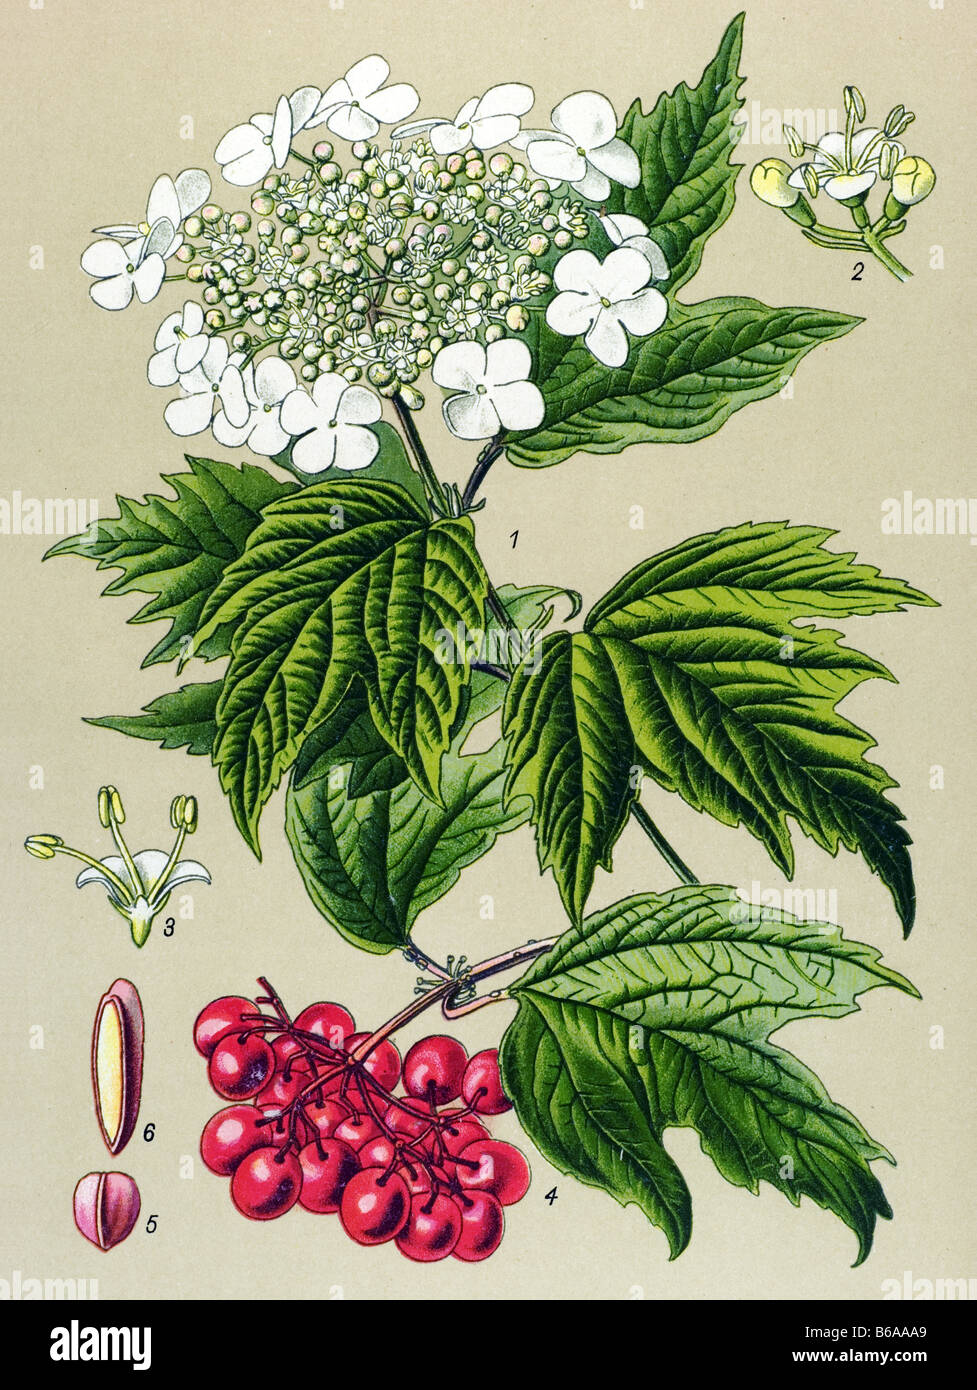 Guelder Rose, Viburnum opulus poisonous plants illustrations Stock Photo